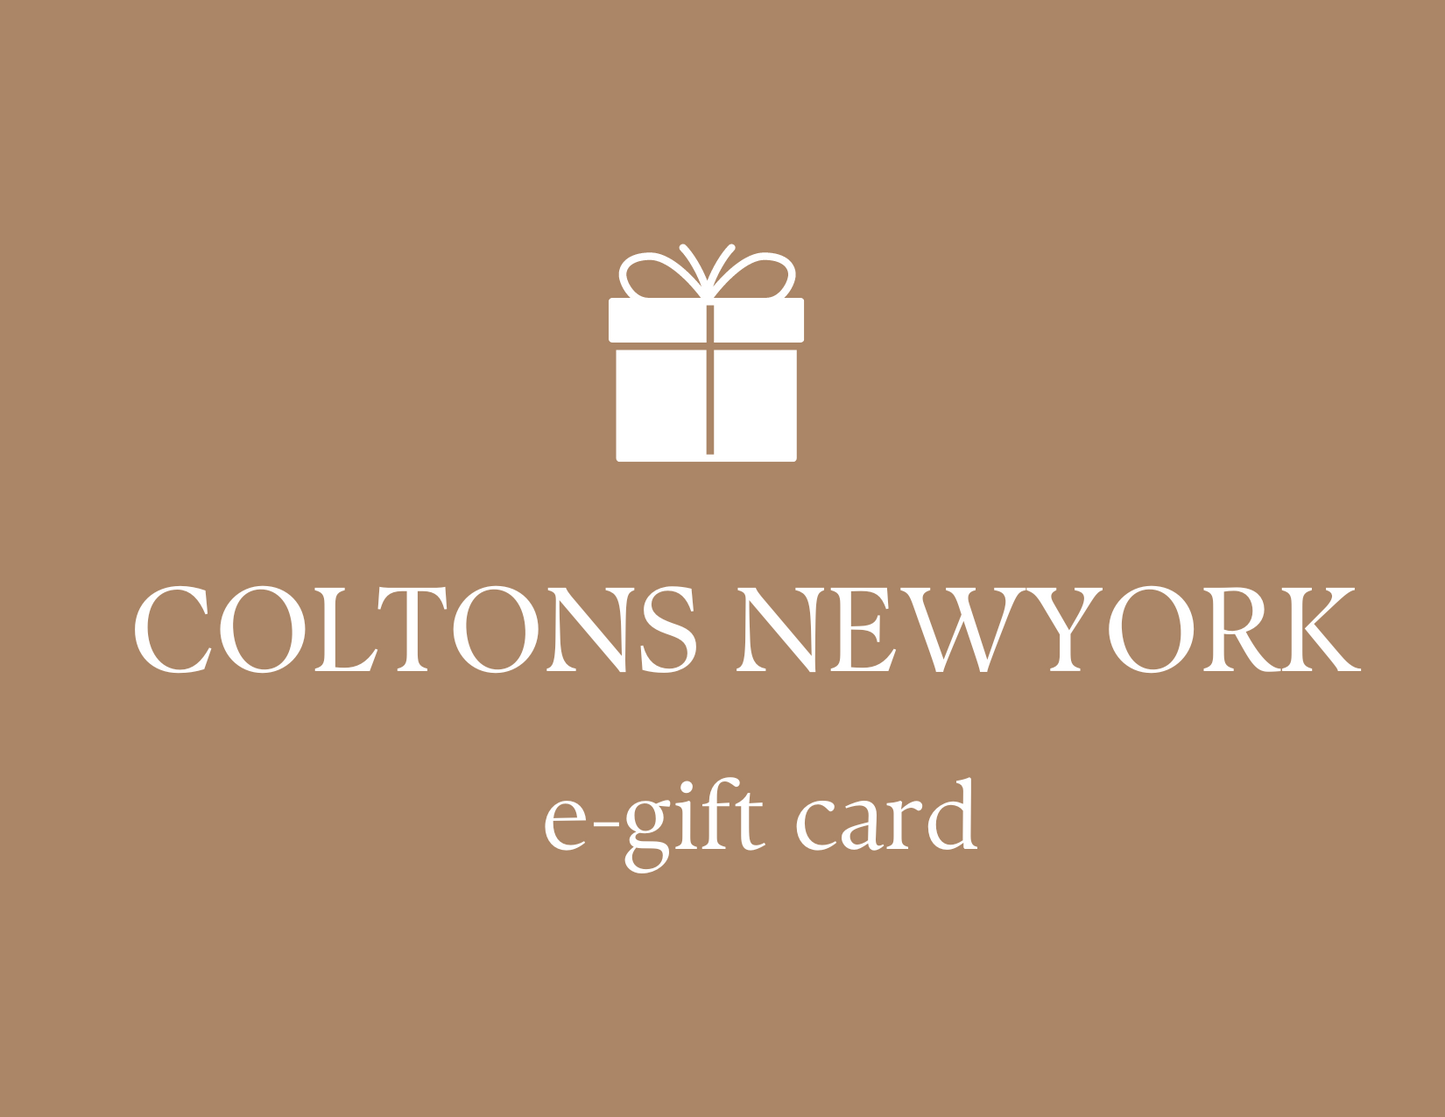 COLTONS NEWYORK e-gift card